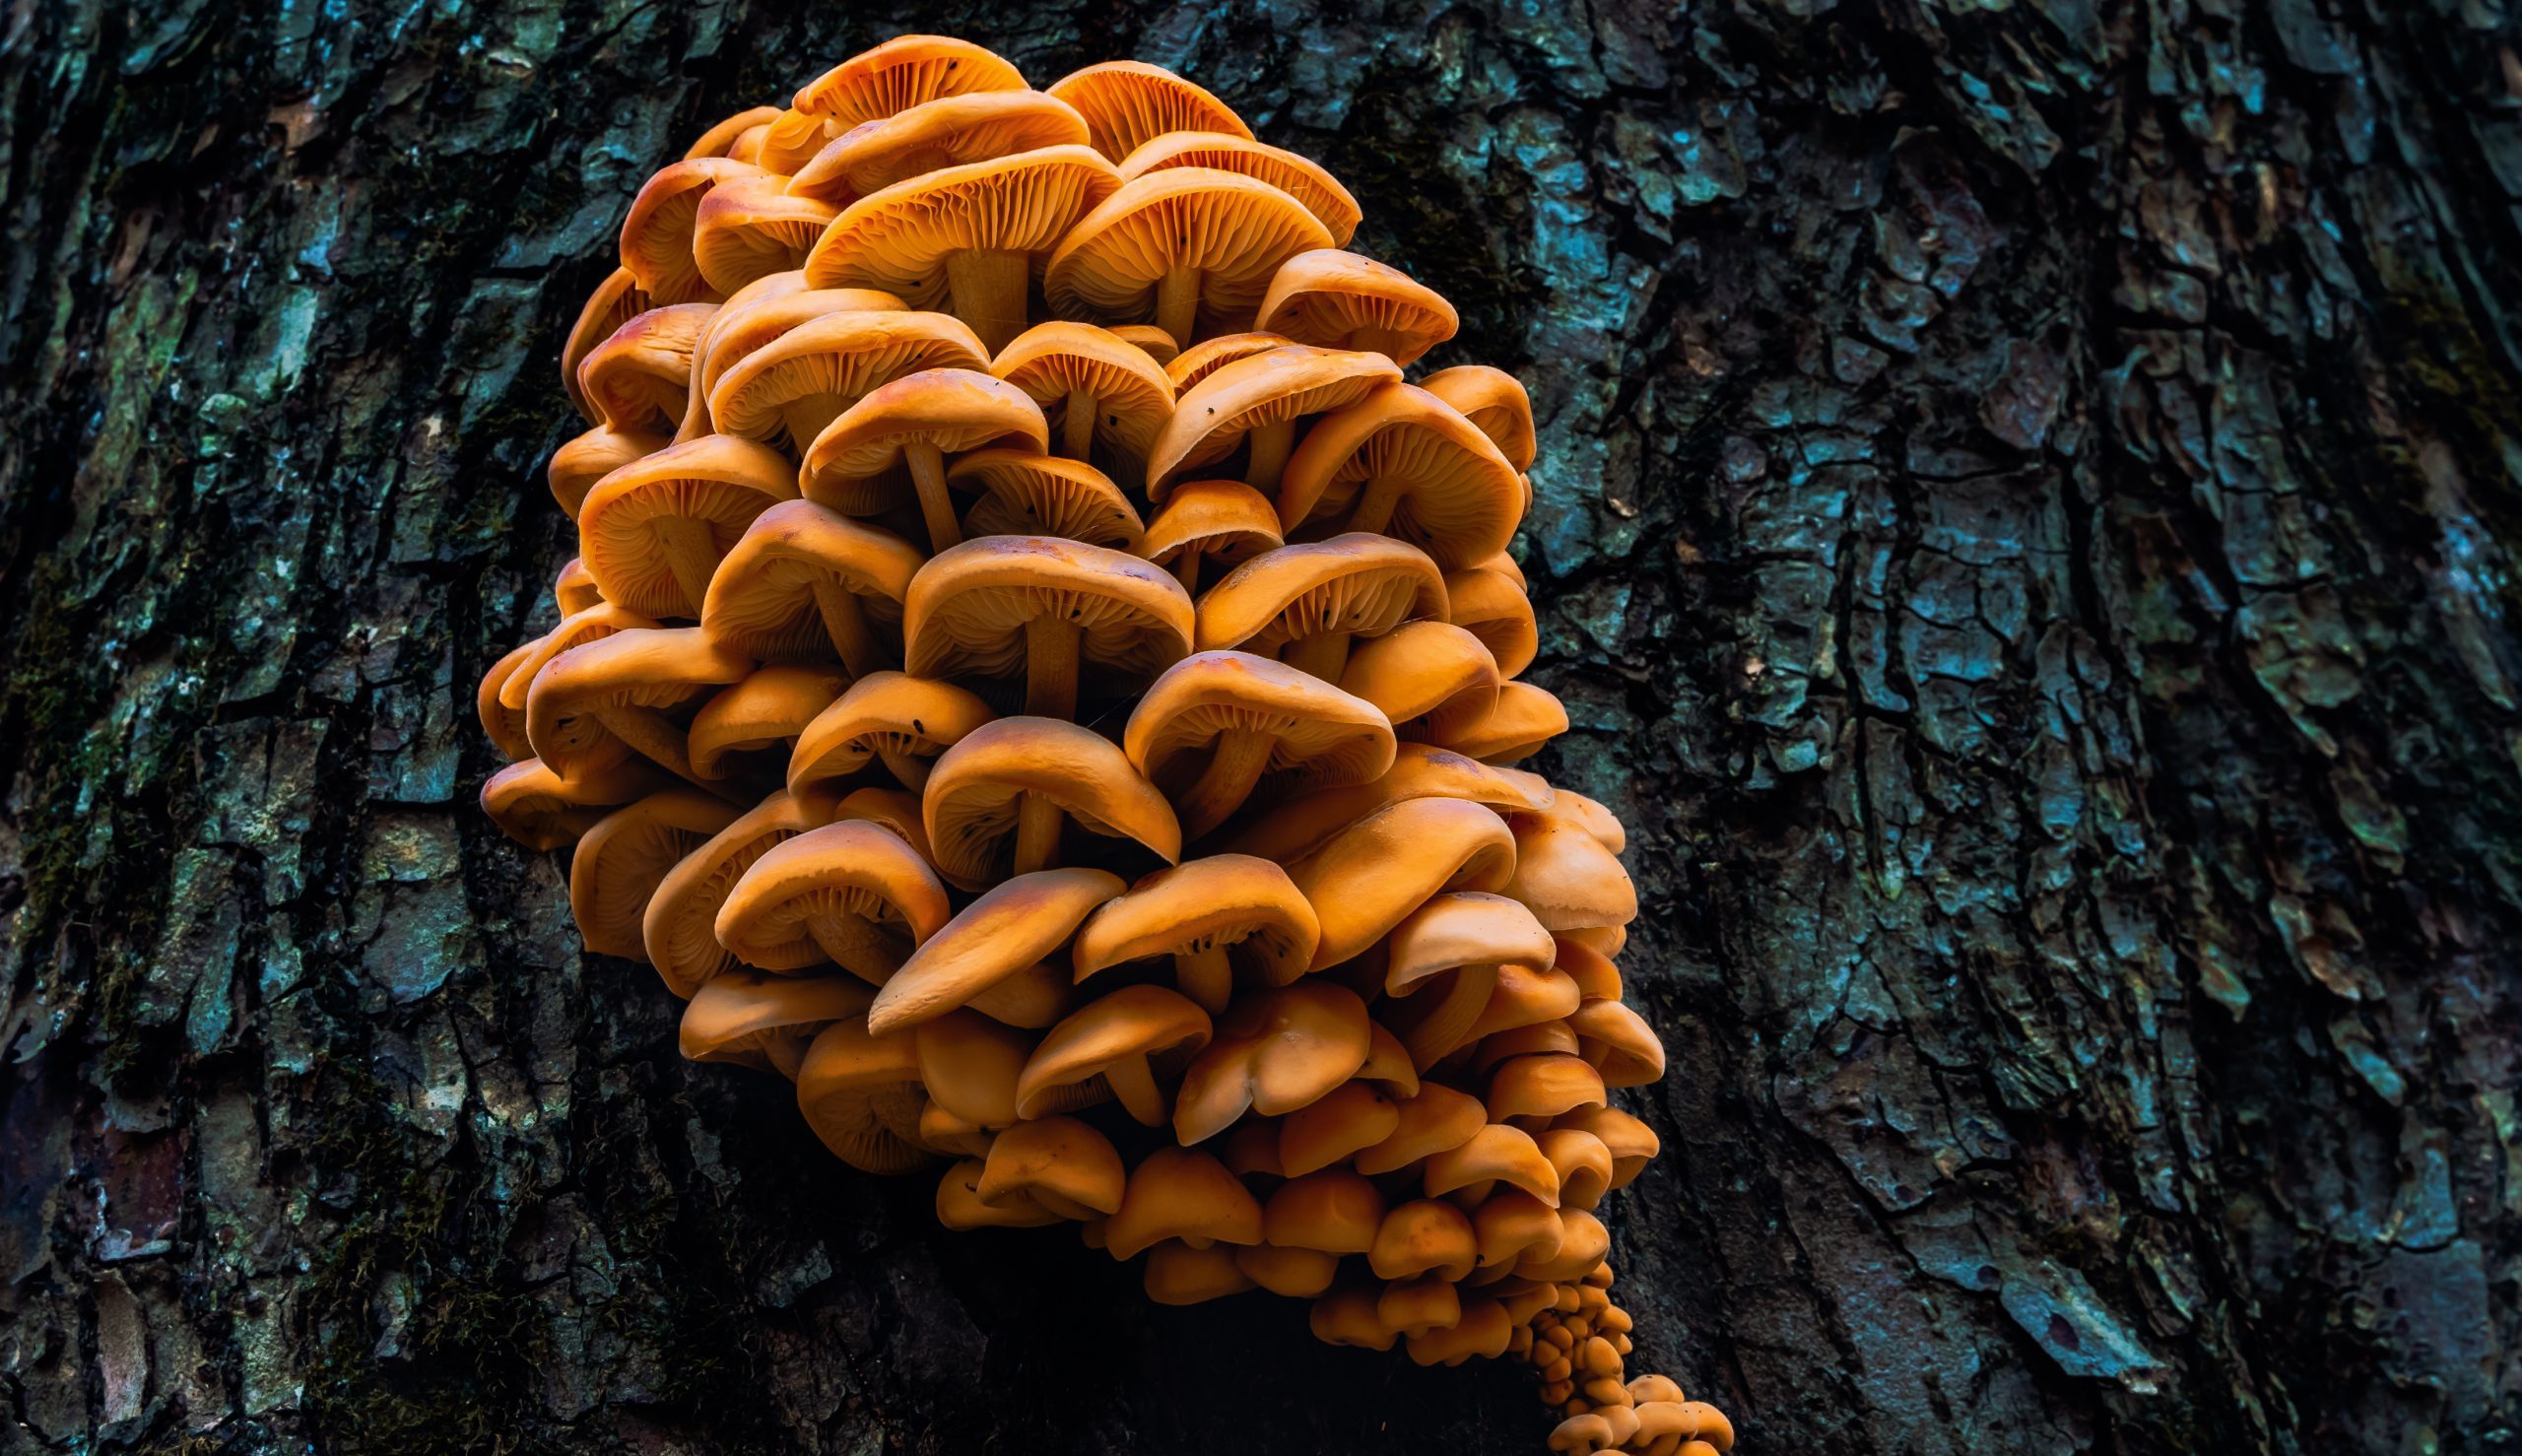 Scientists found that mushrooms communicate. Credit: DepositPhotos